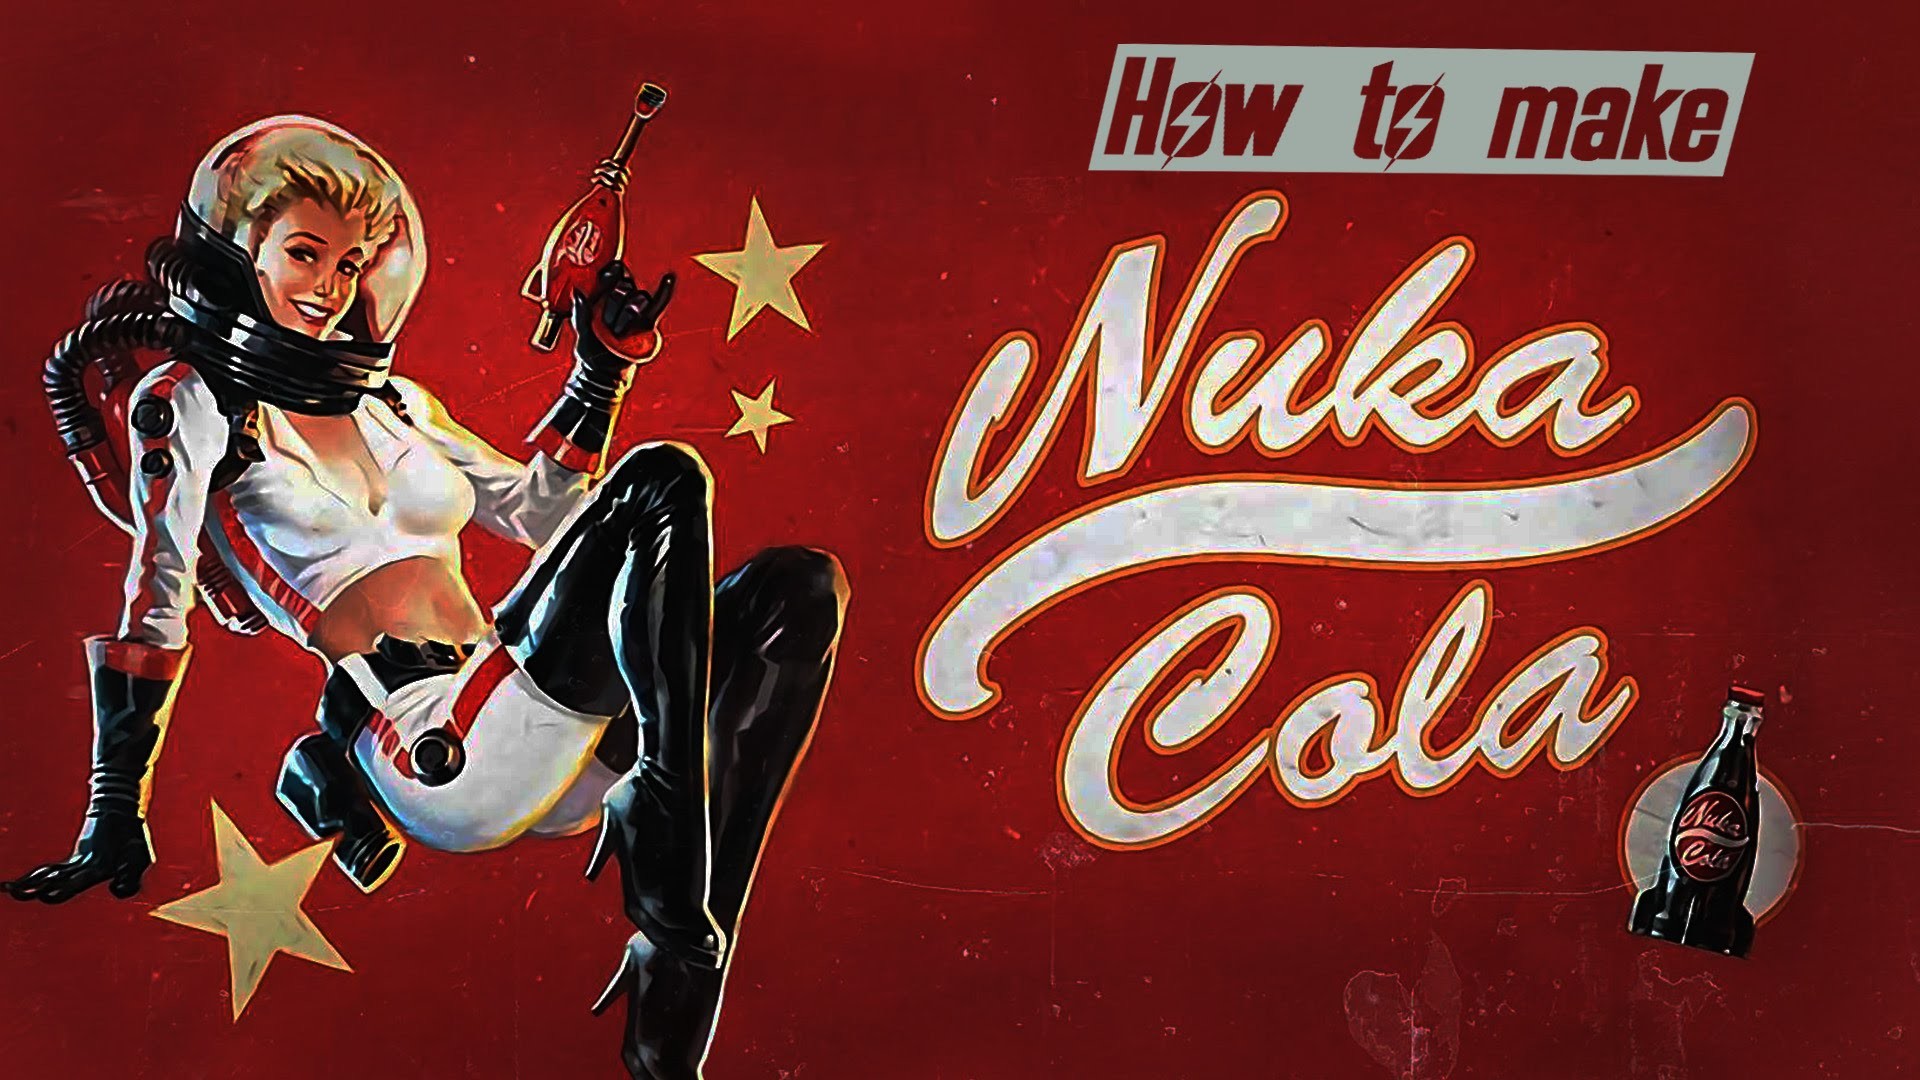 1920x1080 Fallout 4 - How to make Nuka Cola